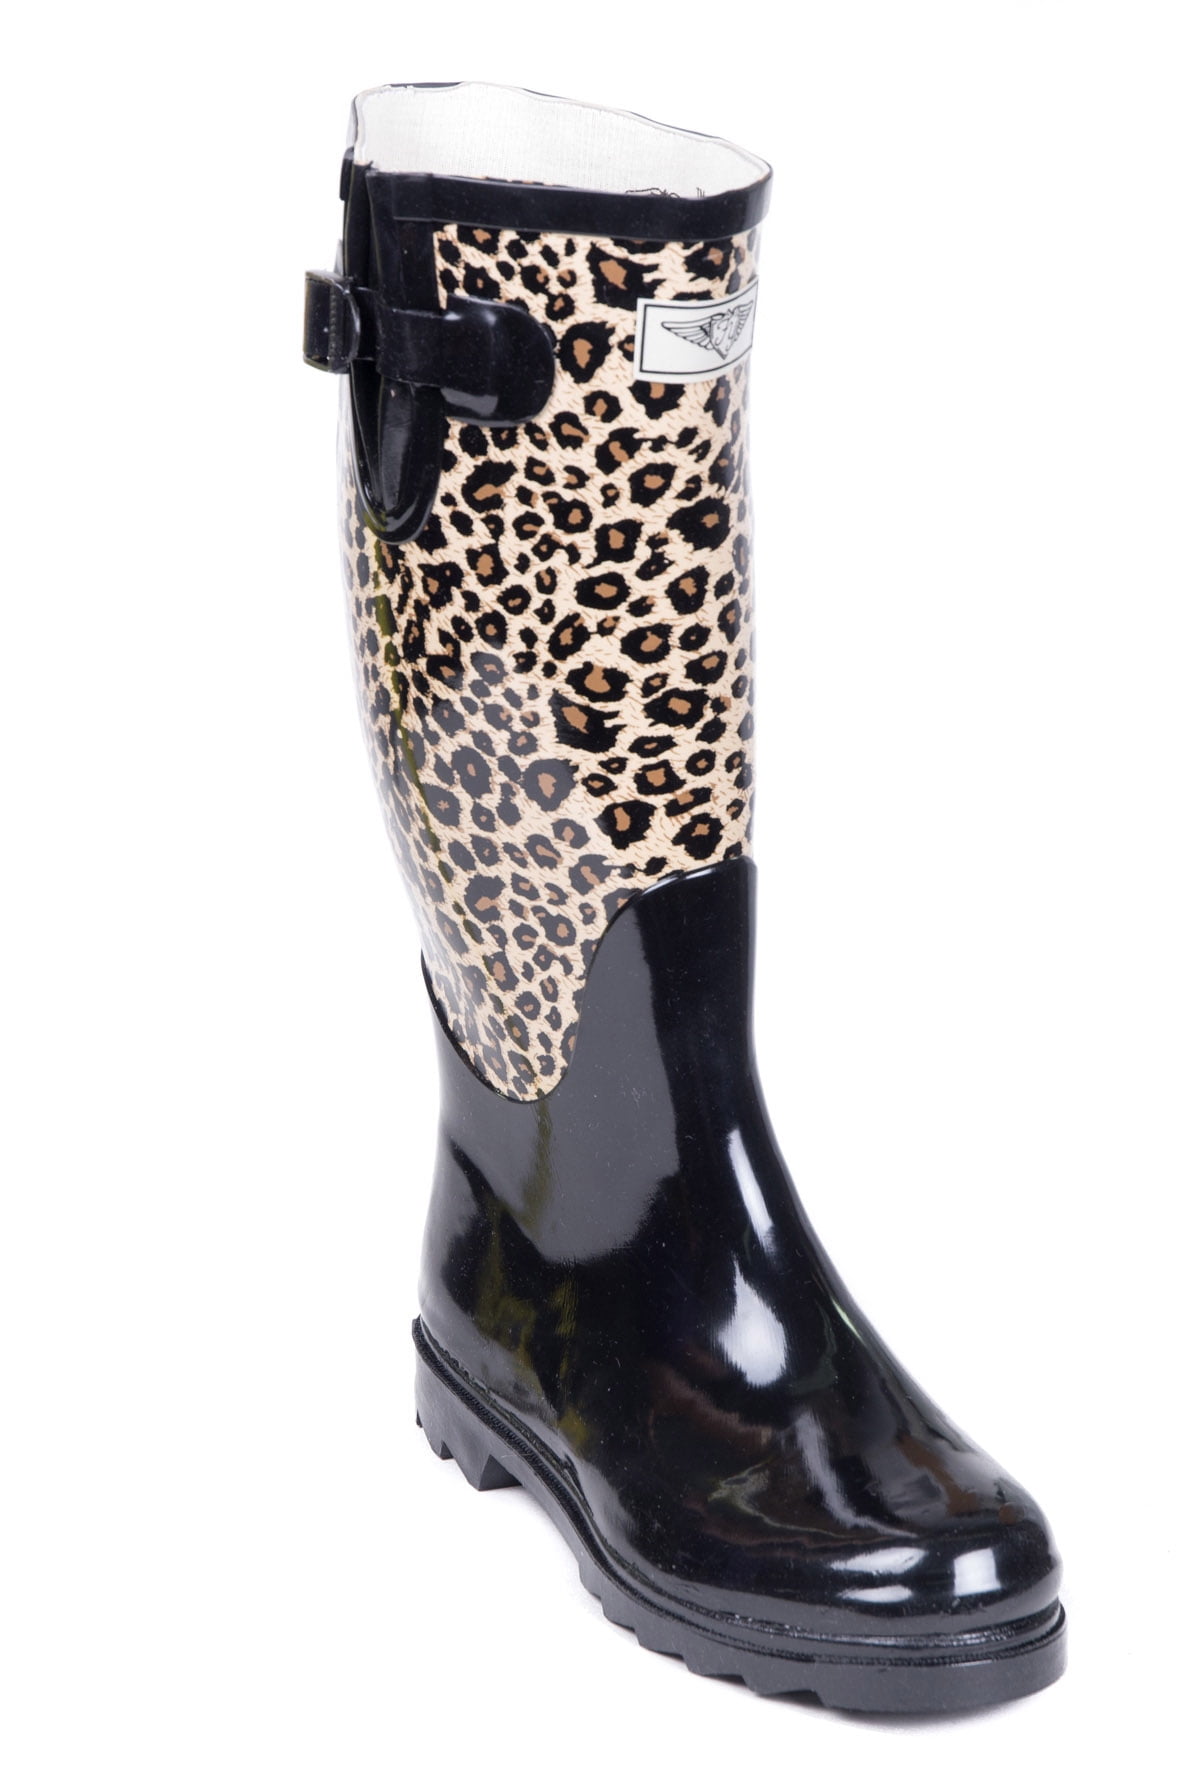 Women Rubber Rain Boots with Cotton Lining, Animal Print - Walmart.com